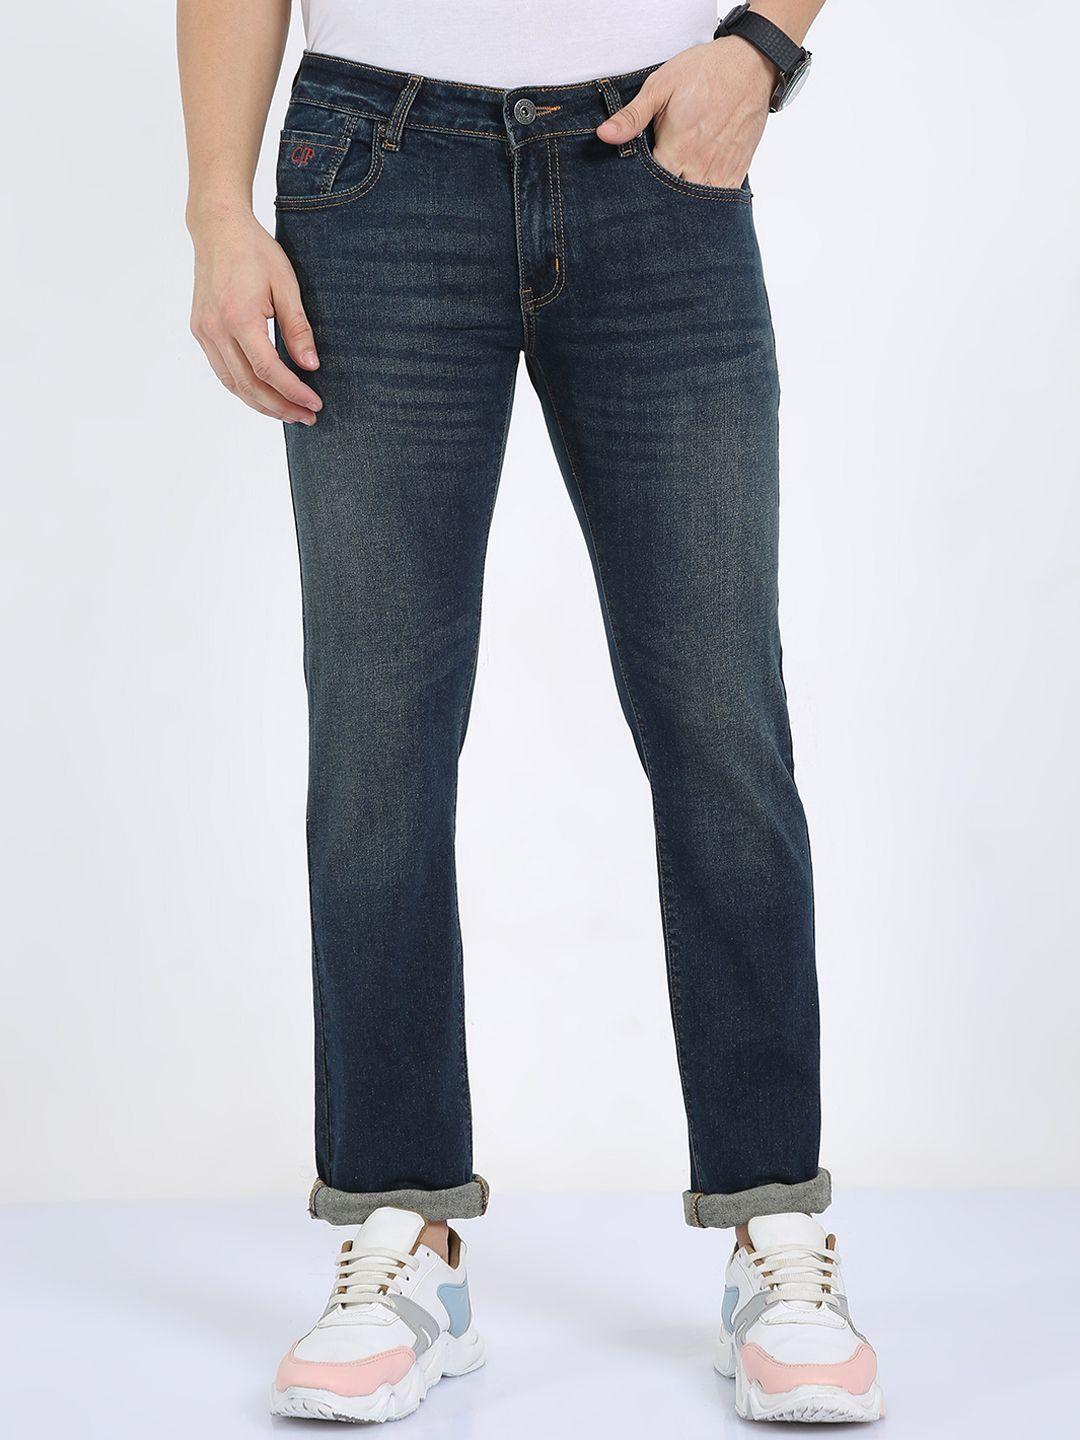 classic polo men jean slim fit light fade cotton denim mid rise jeans